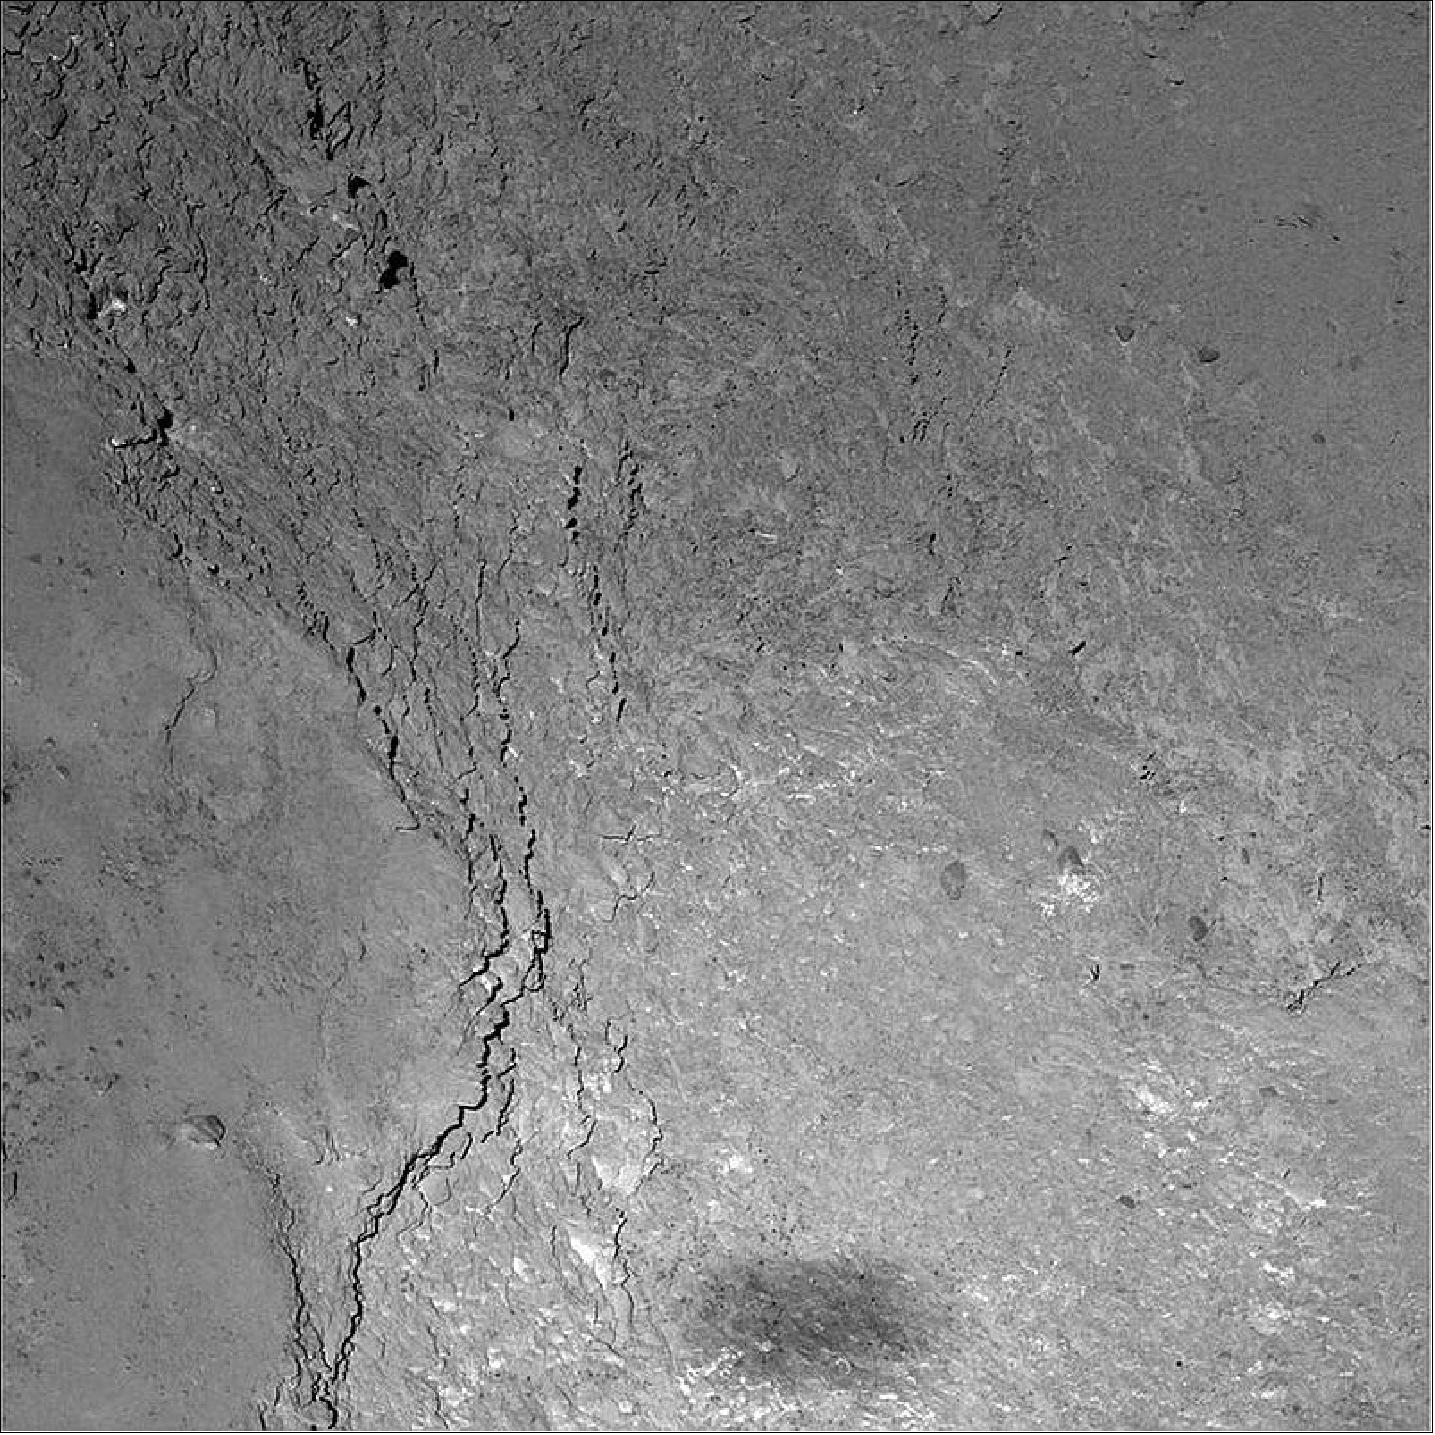 Figure 145: Comet flyby: OSIRIS catches glimpse of Rosetta’s shadow (image credit: ESA/Rosetta/MPS for OSIRIS Team MPS/UPD/LAM/IAA/SSO/INTA/UPM/DASP/IDA)